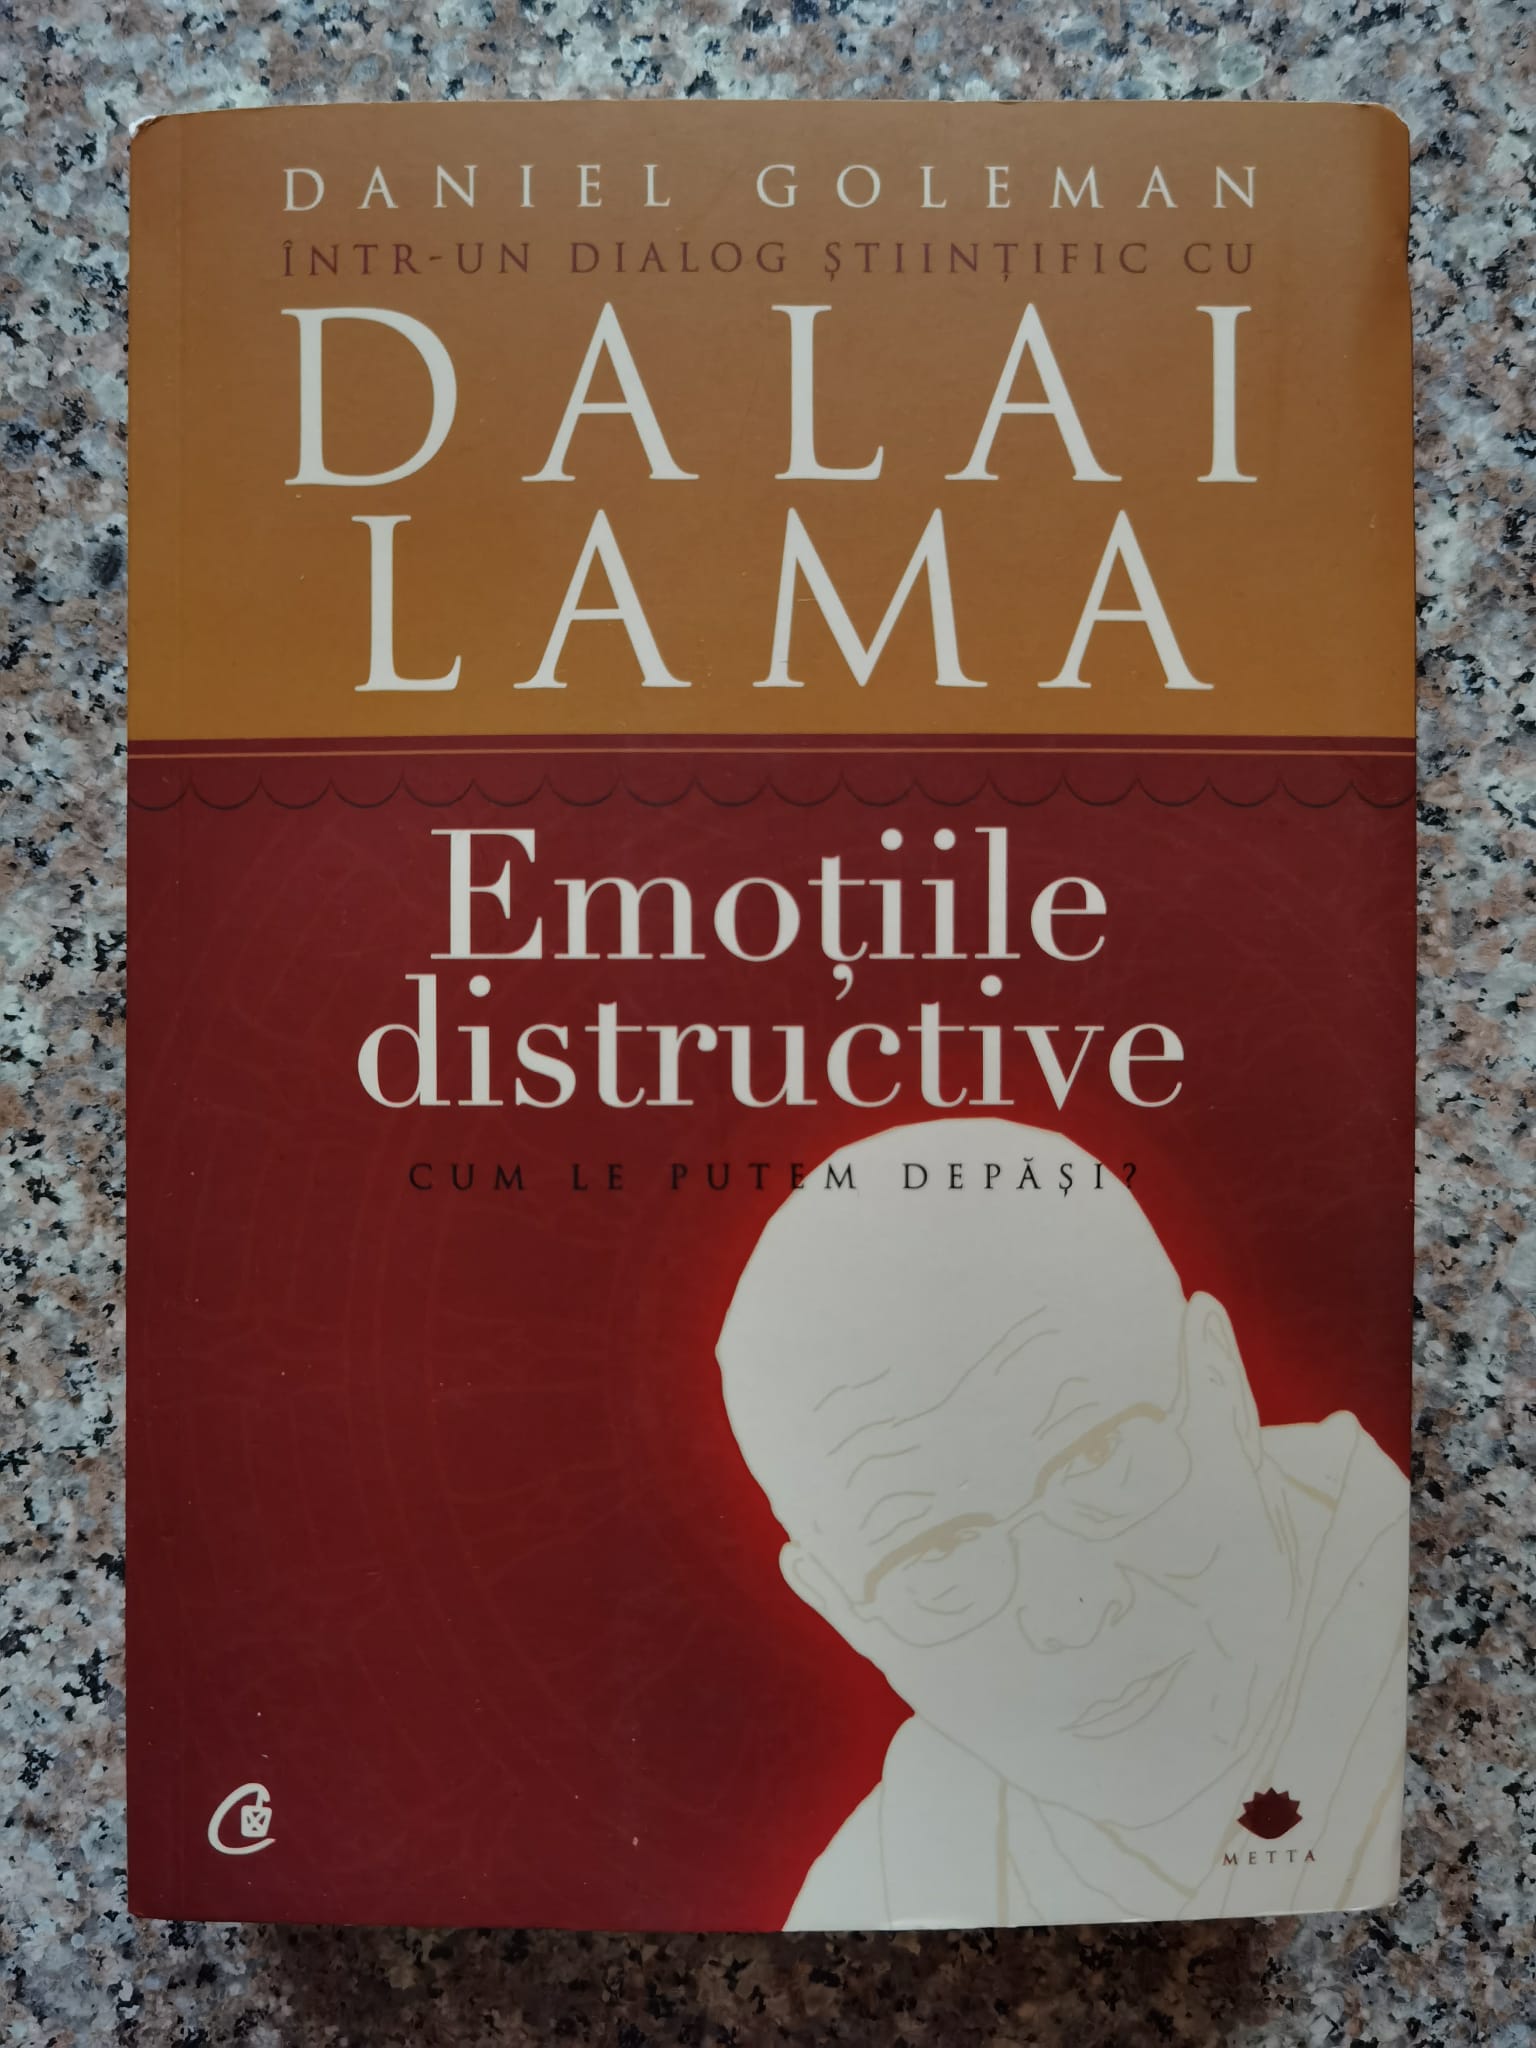 emotiile distructive                                                                                 dalai lama                                                                                          